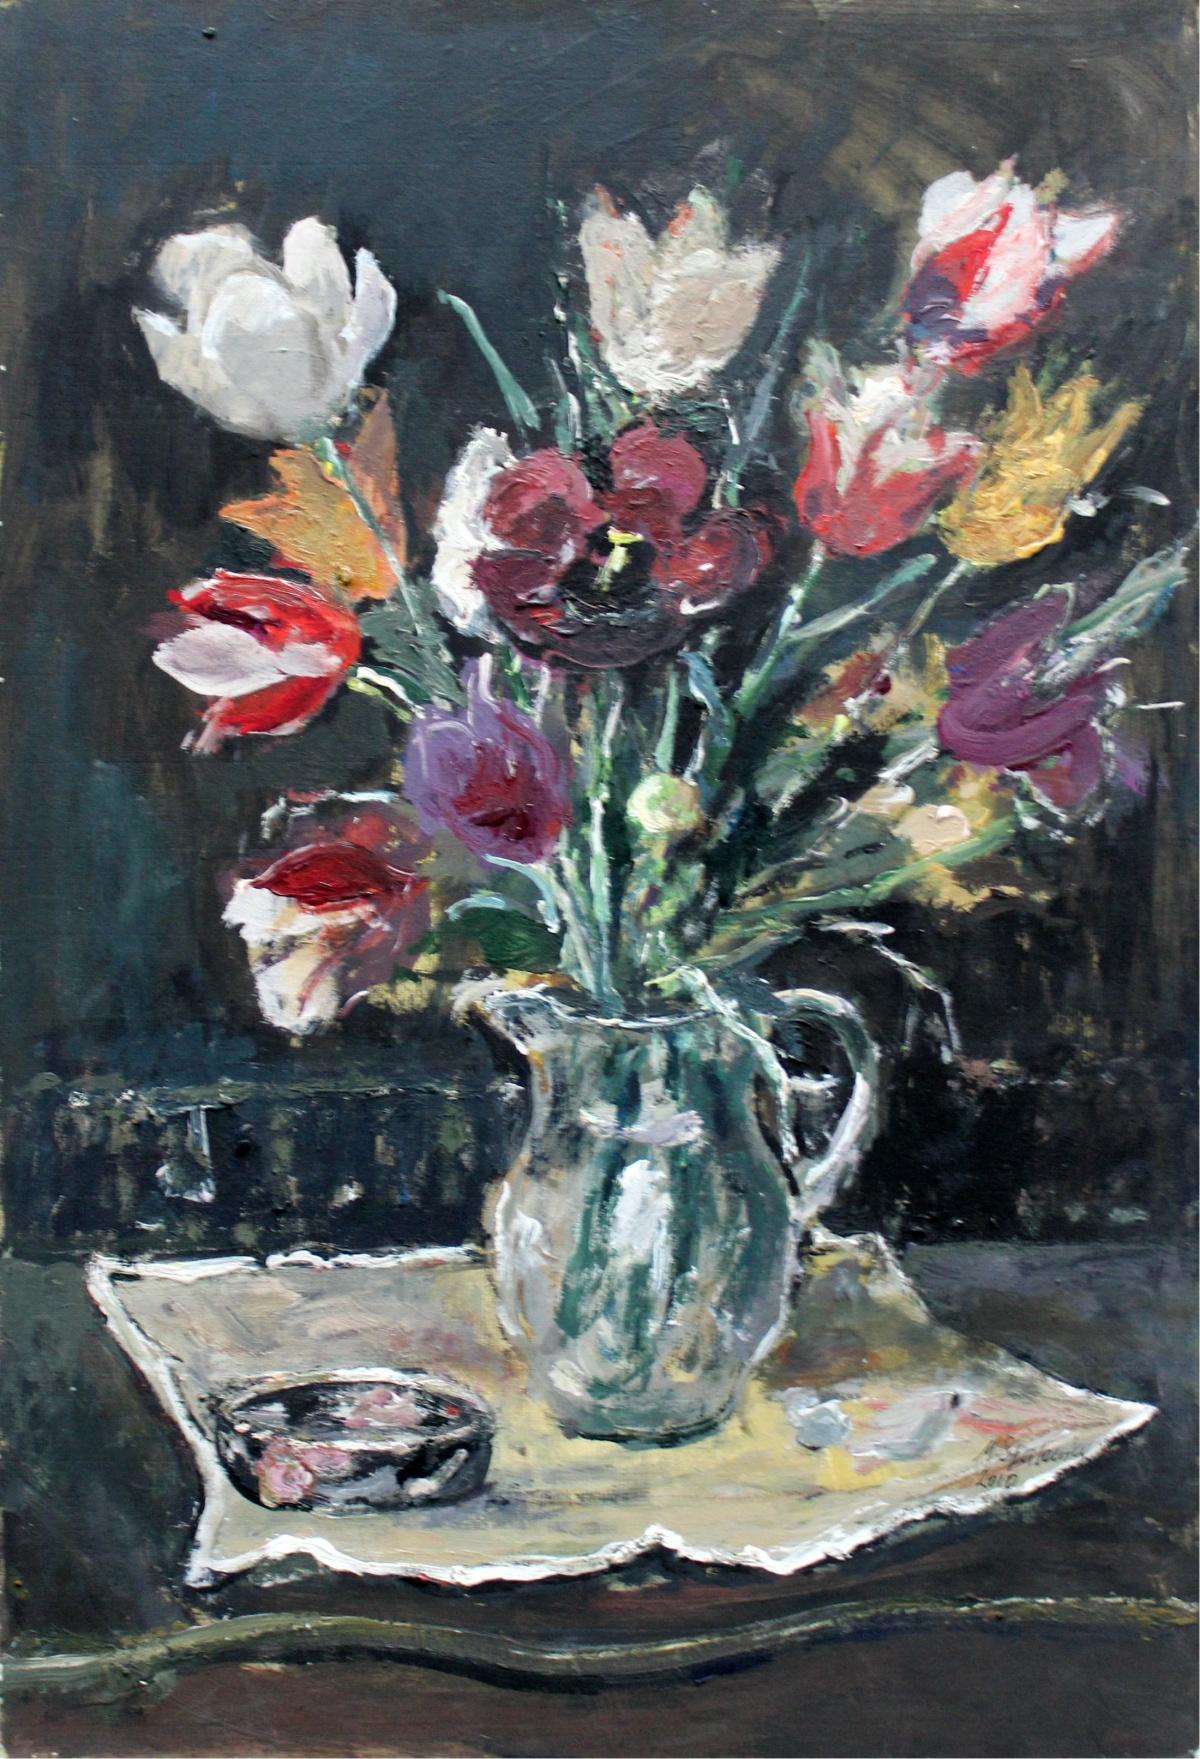 Magdalena Spasowicz Figurative Painting - Flowers - XXI century, Oil painting, Figurative, Grey tones, Still life